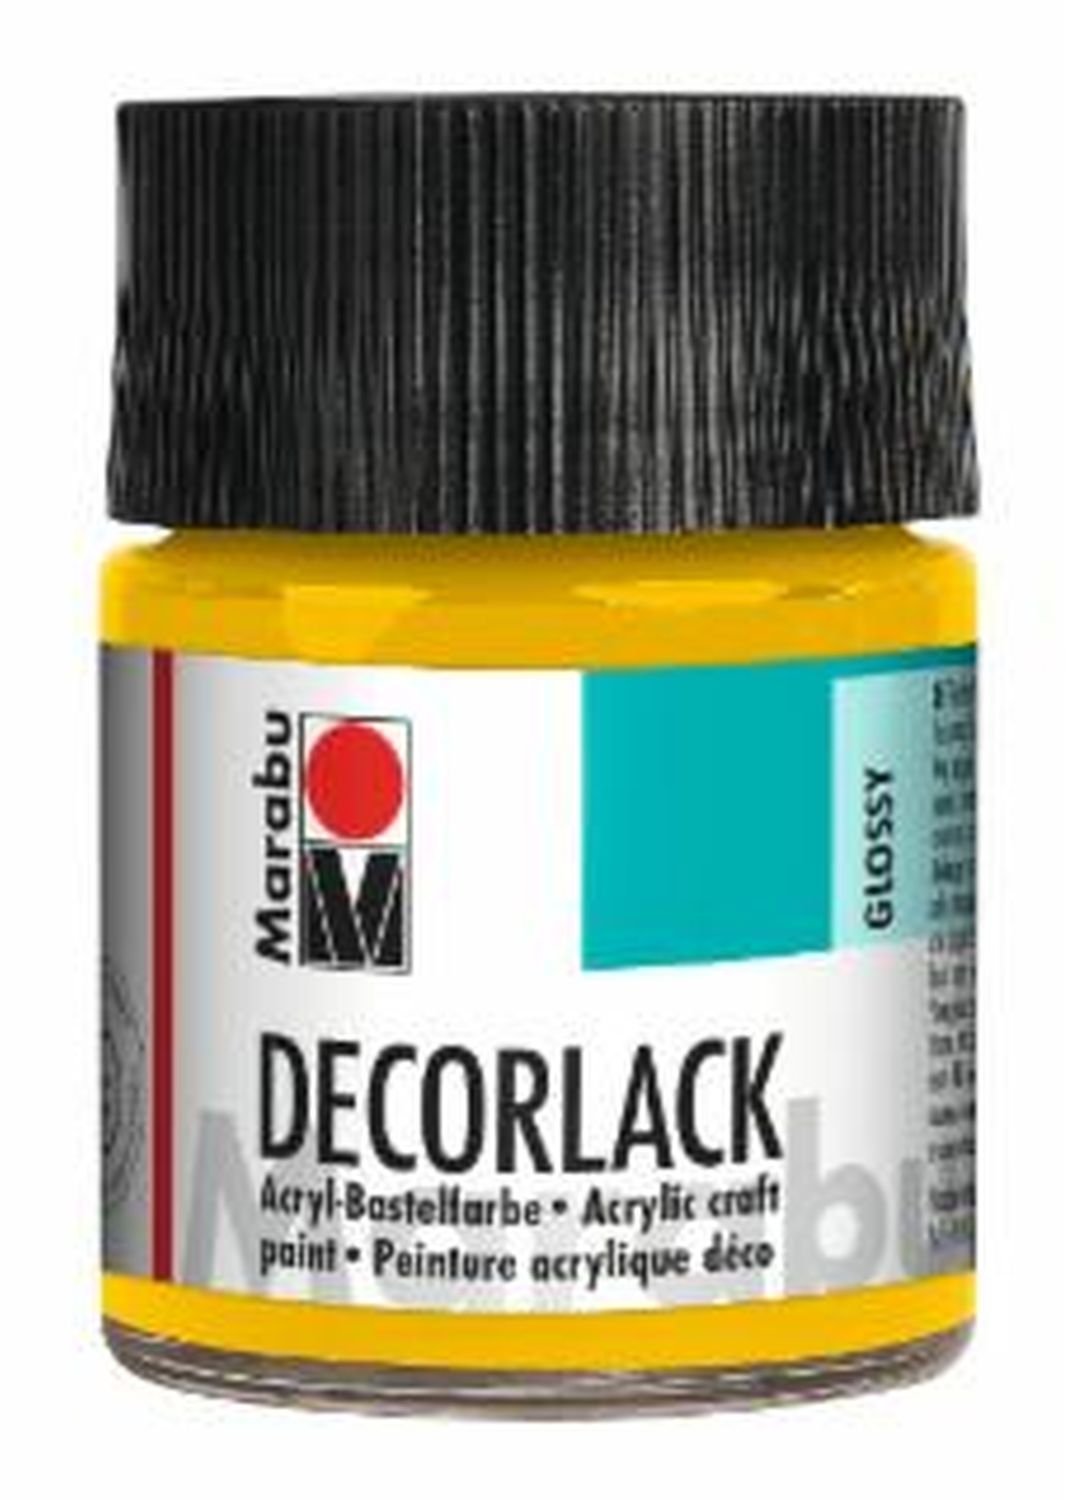 Decorlack Acryl - Mittelgelb 021, 50 ml